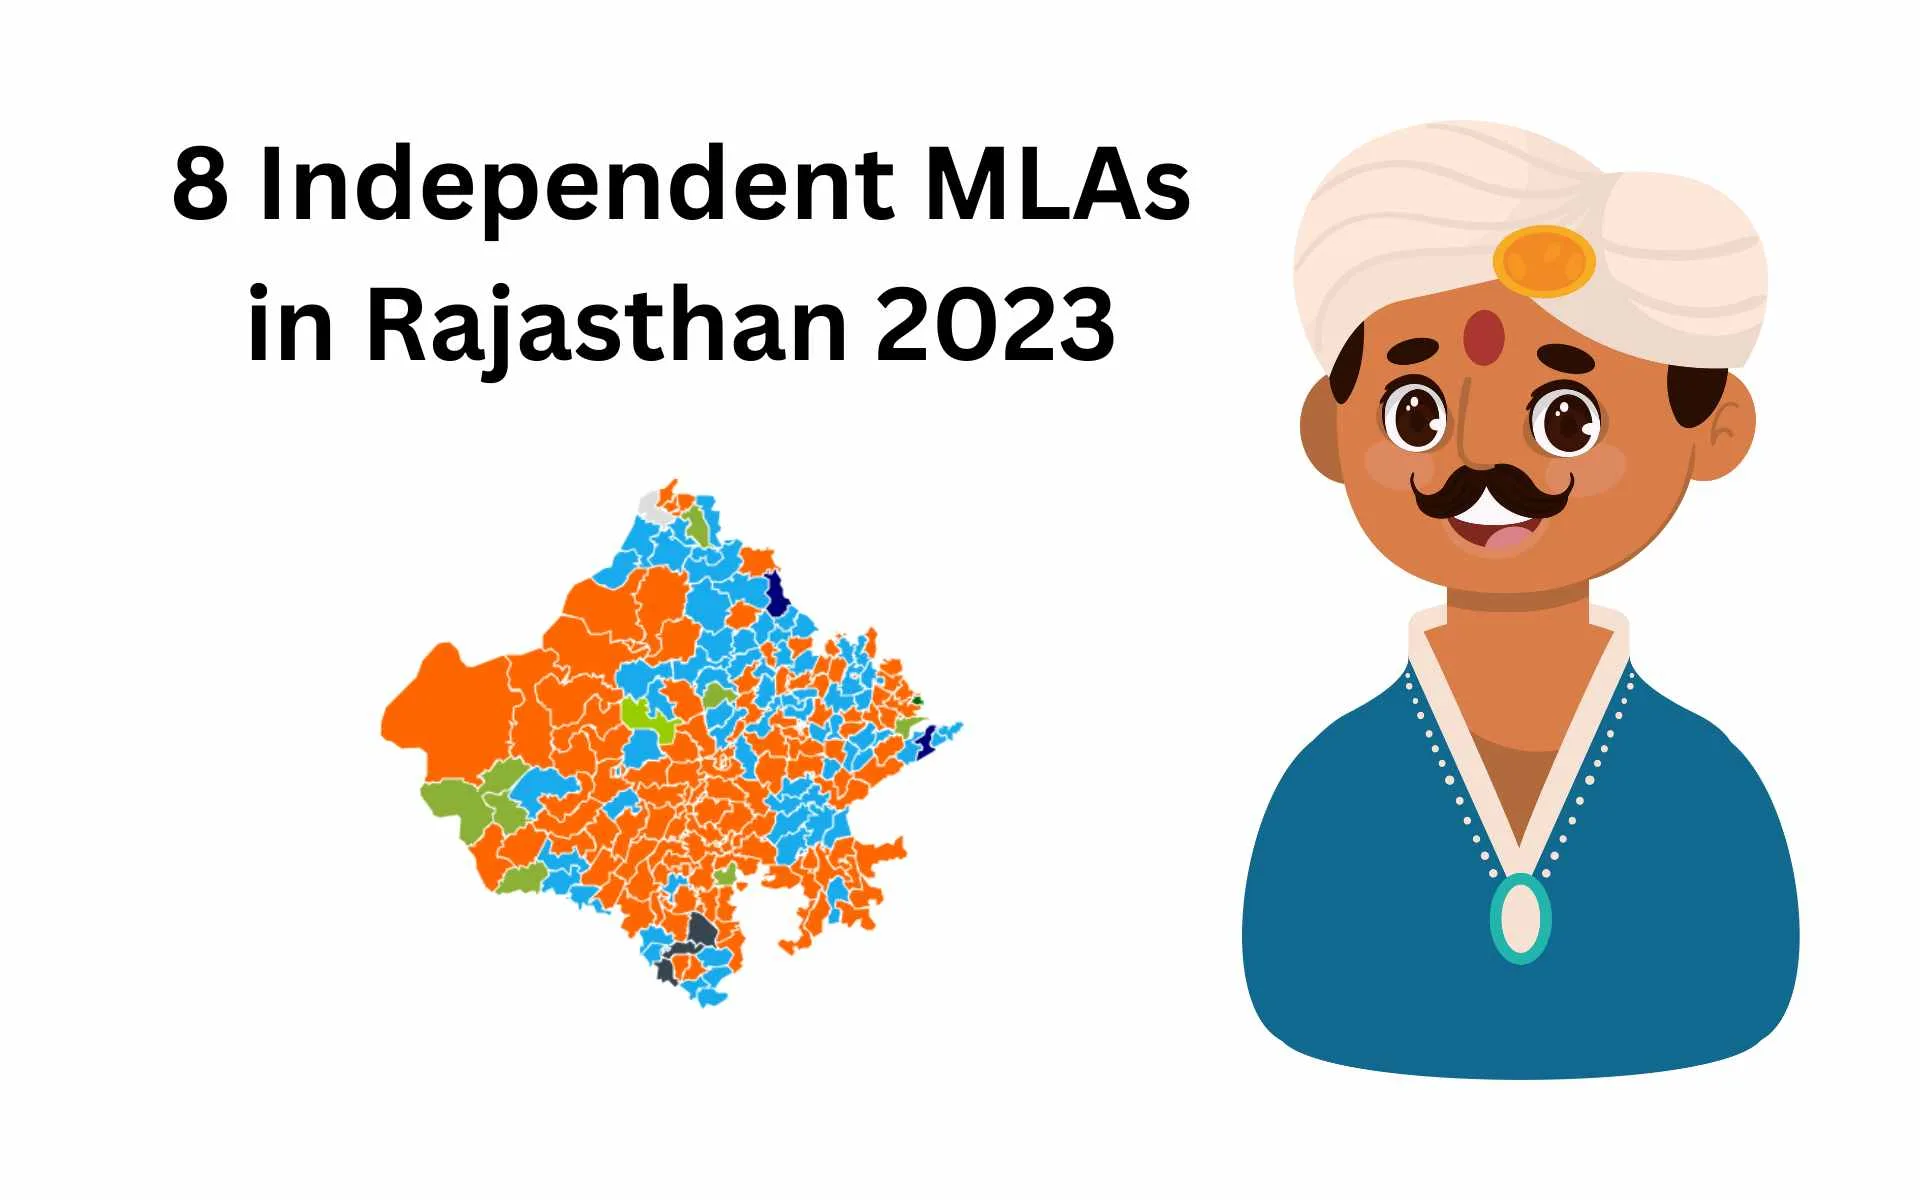 Independent MLAs in Rajasthan